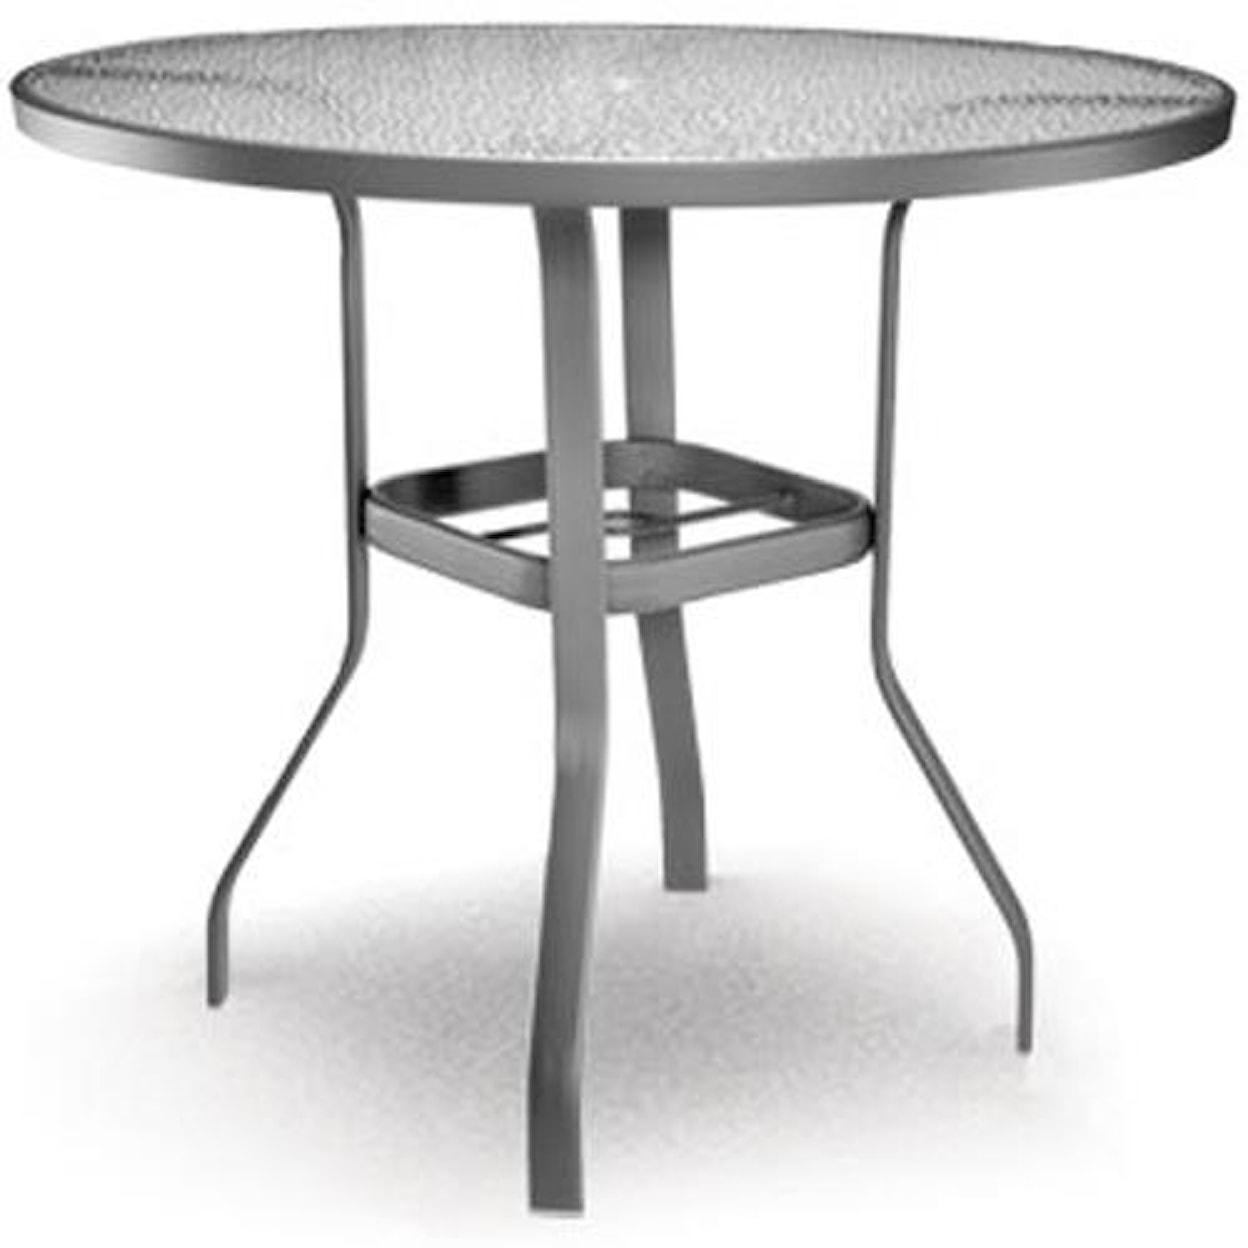 Homecrest Glass 48" Bar Table with Umbrella Hole